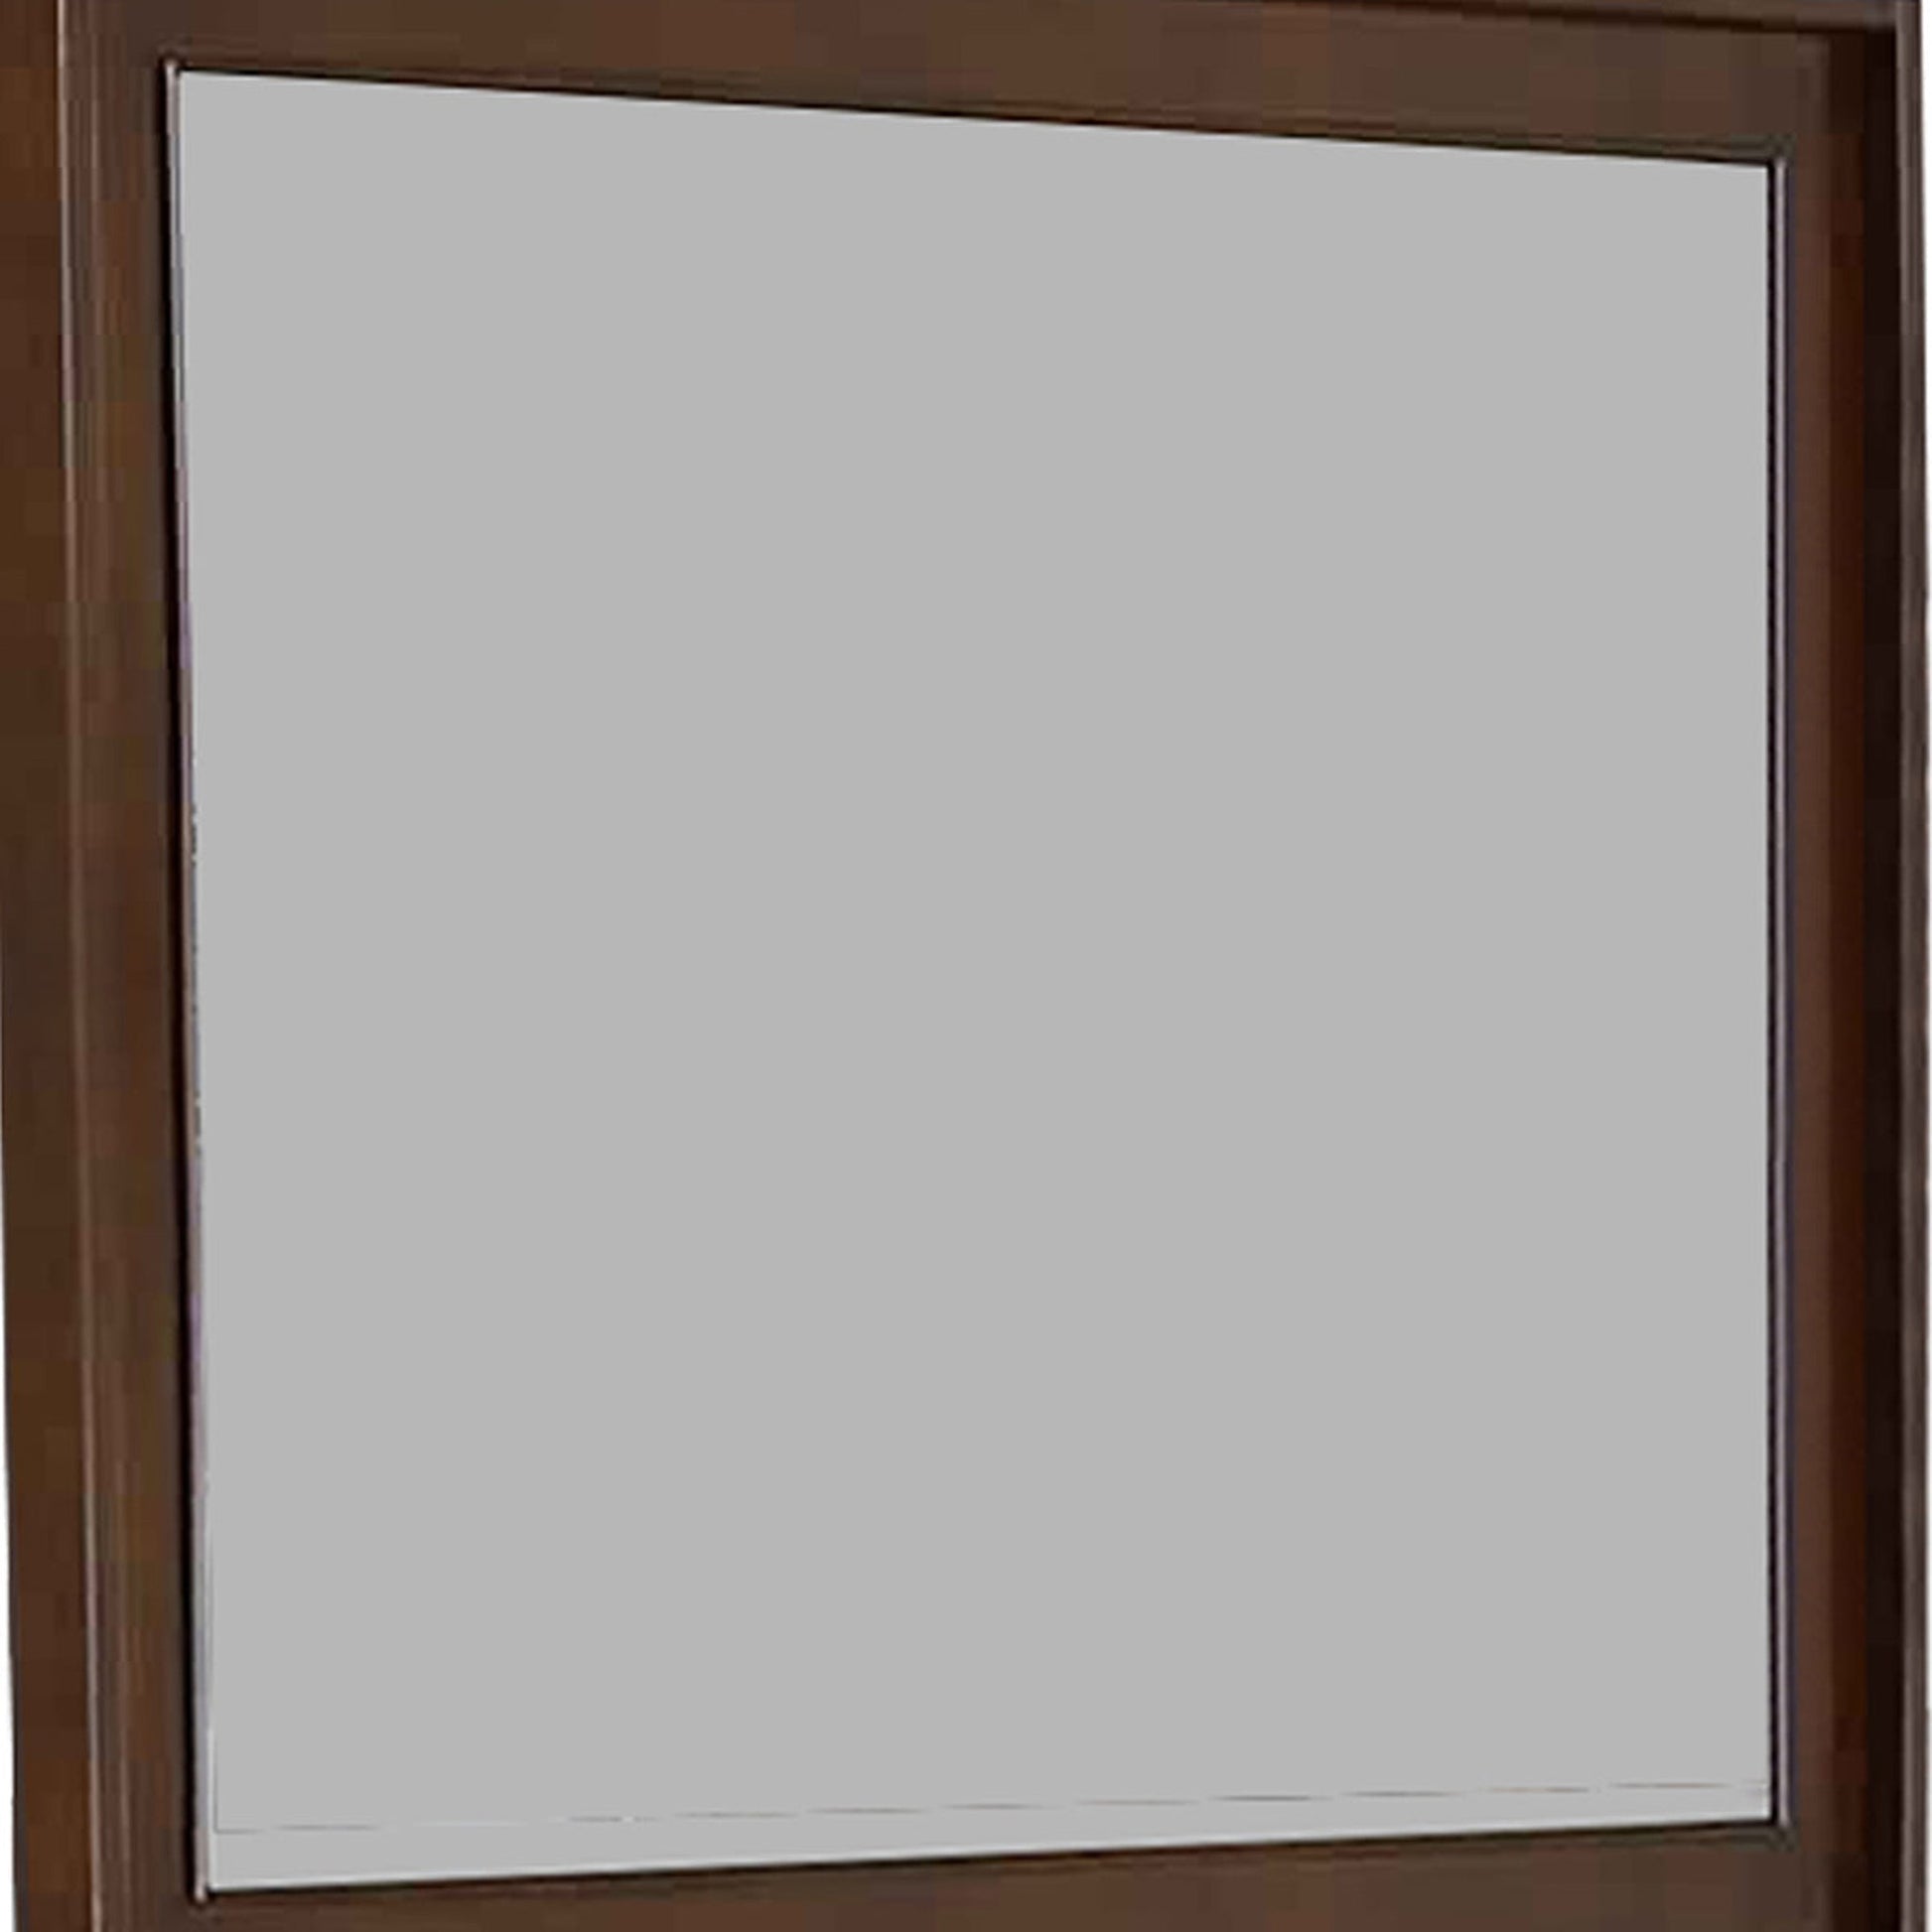 Benzara Brown Rectangular Wooden Frame Mirror With Raised Edges